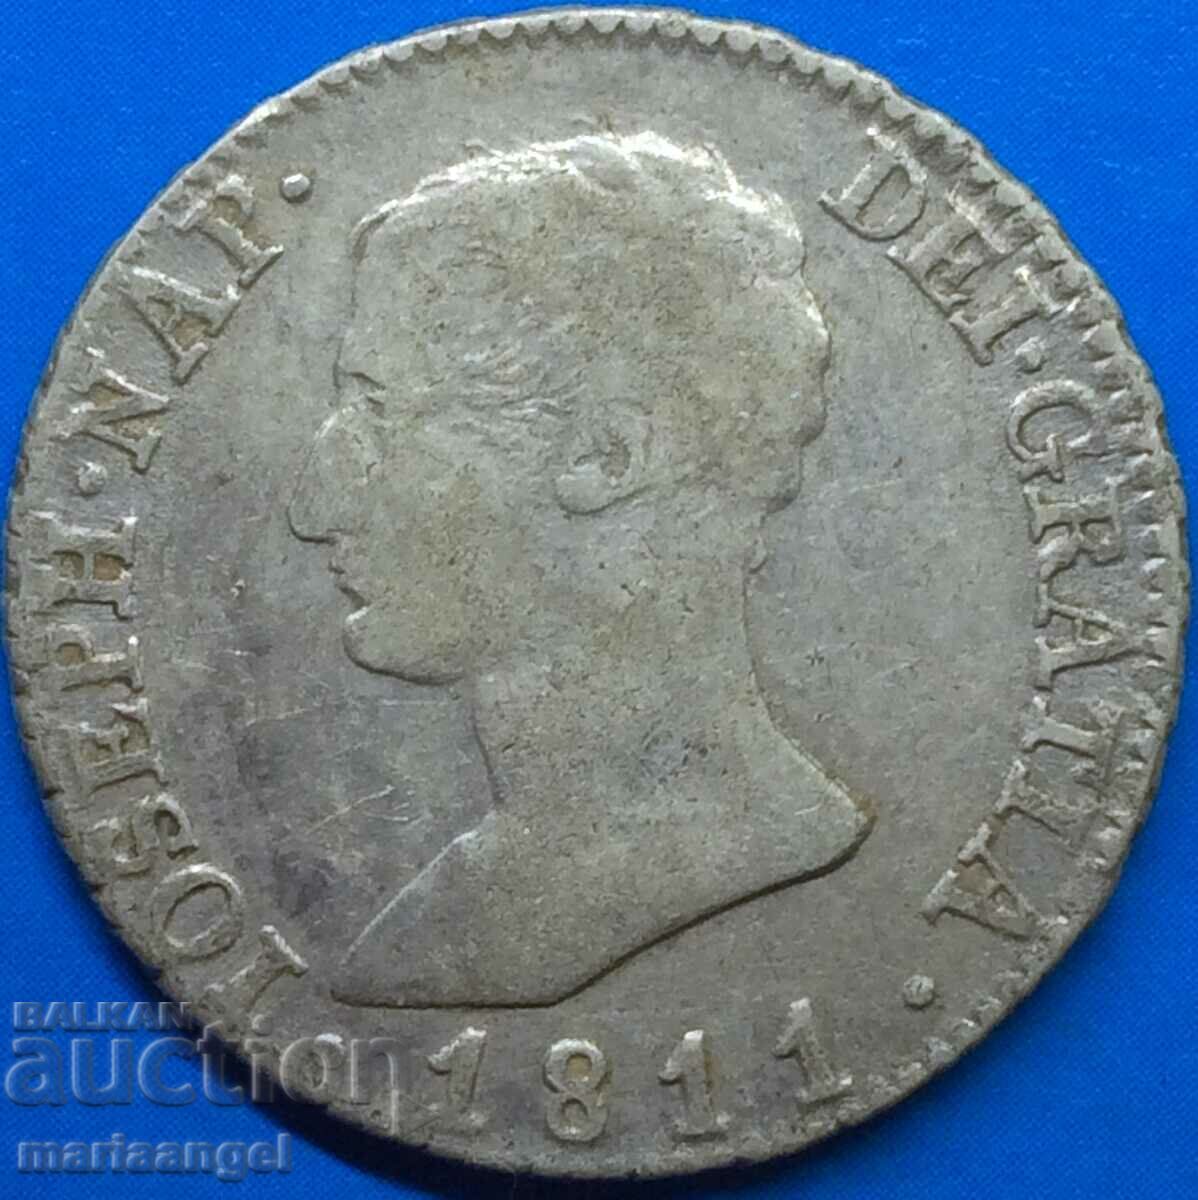 Jose Napoleon 4 Reales 1811 Spain Madrid Silver